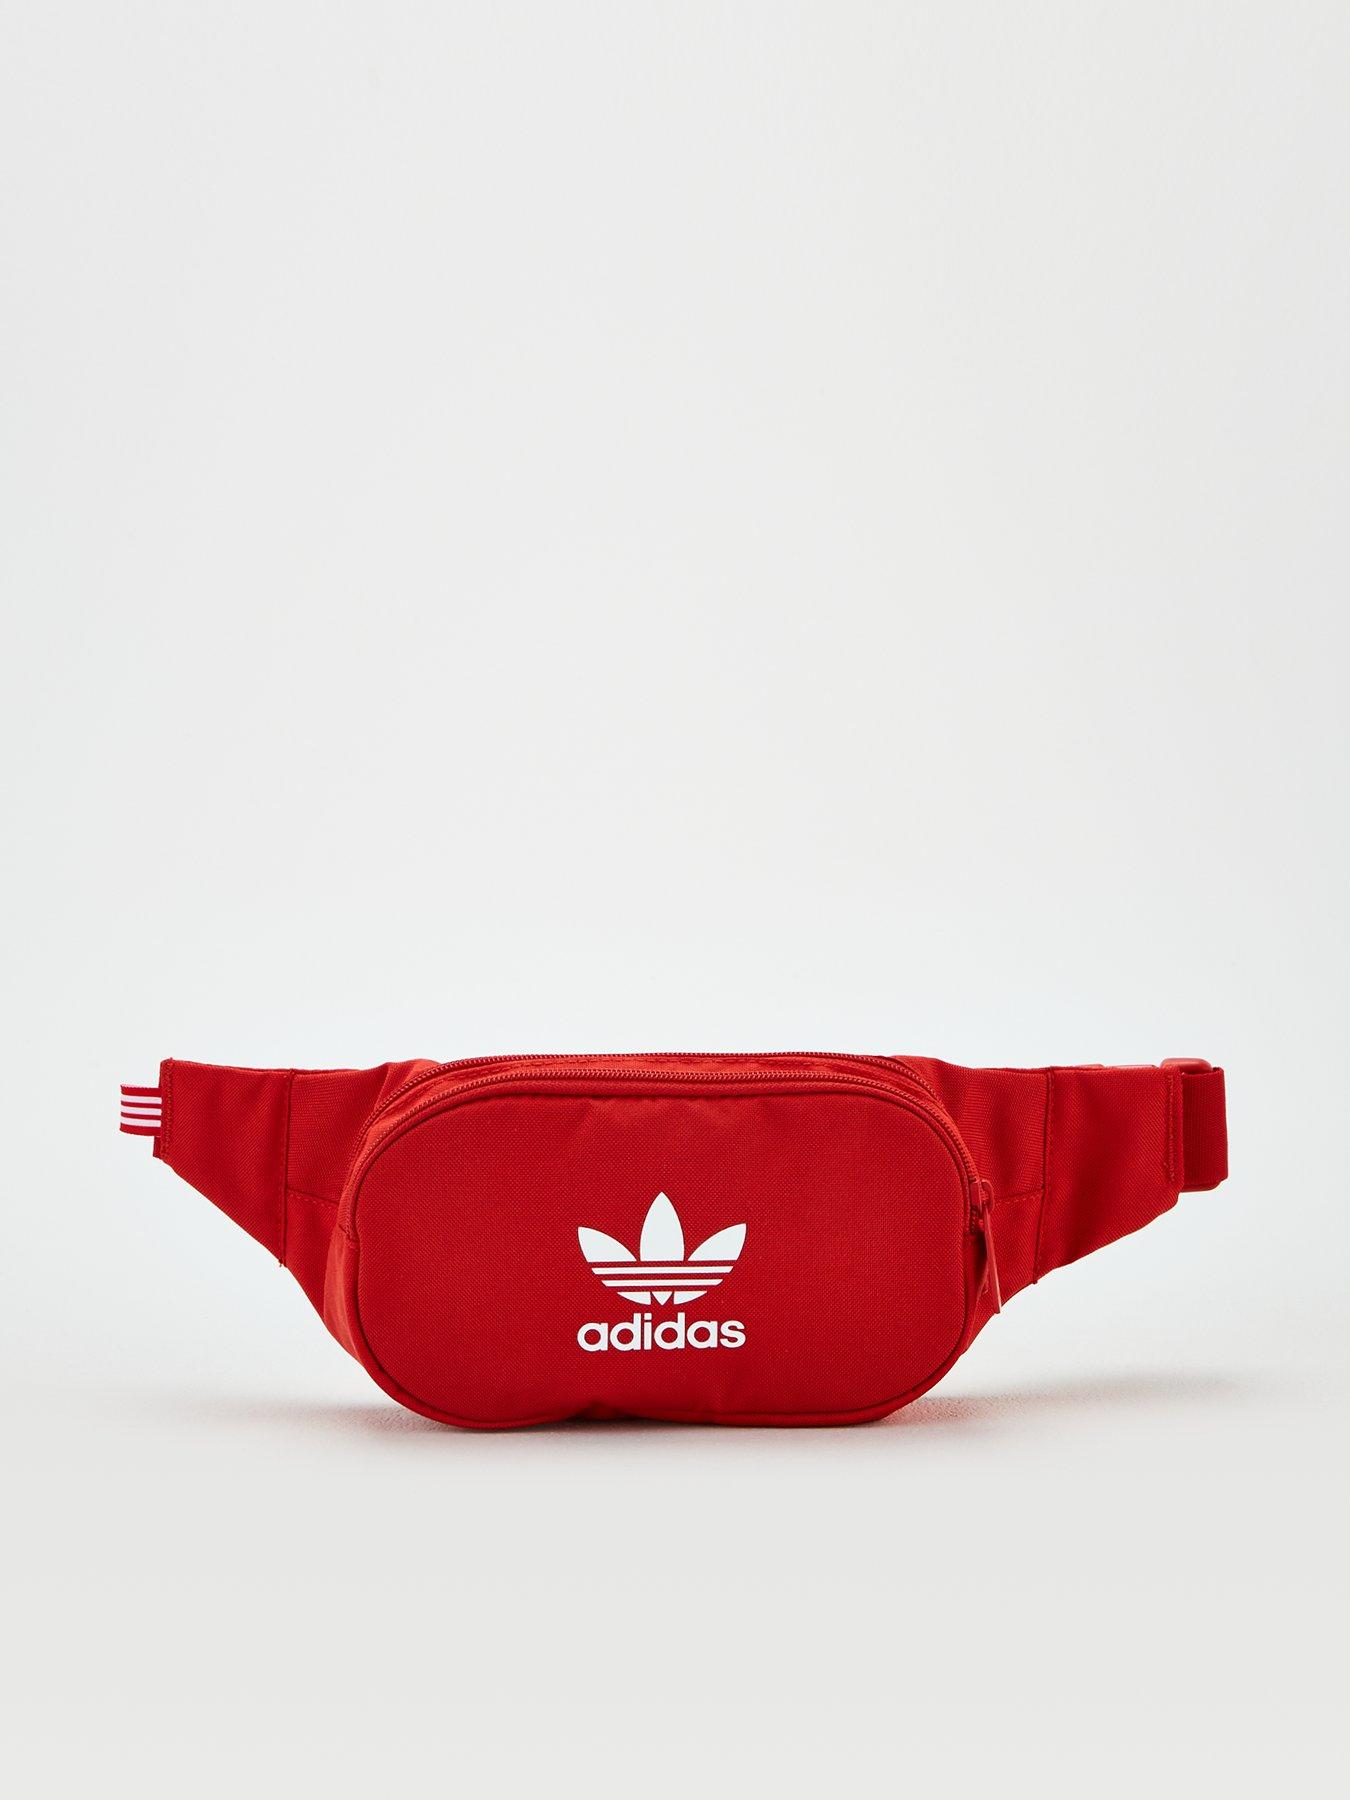 adidas red waist bag